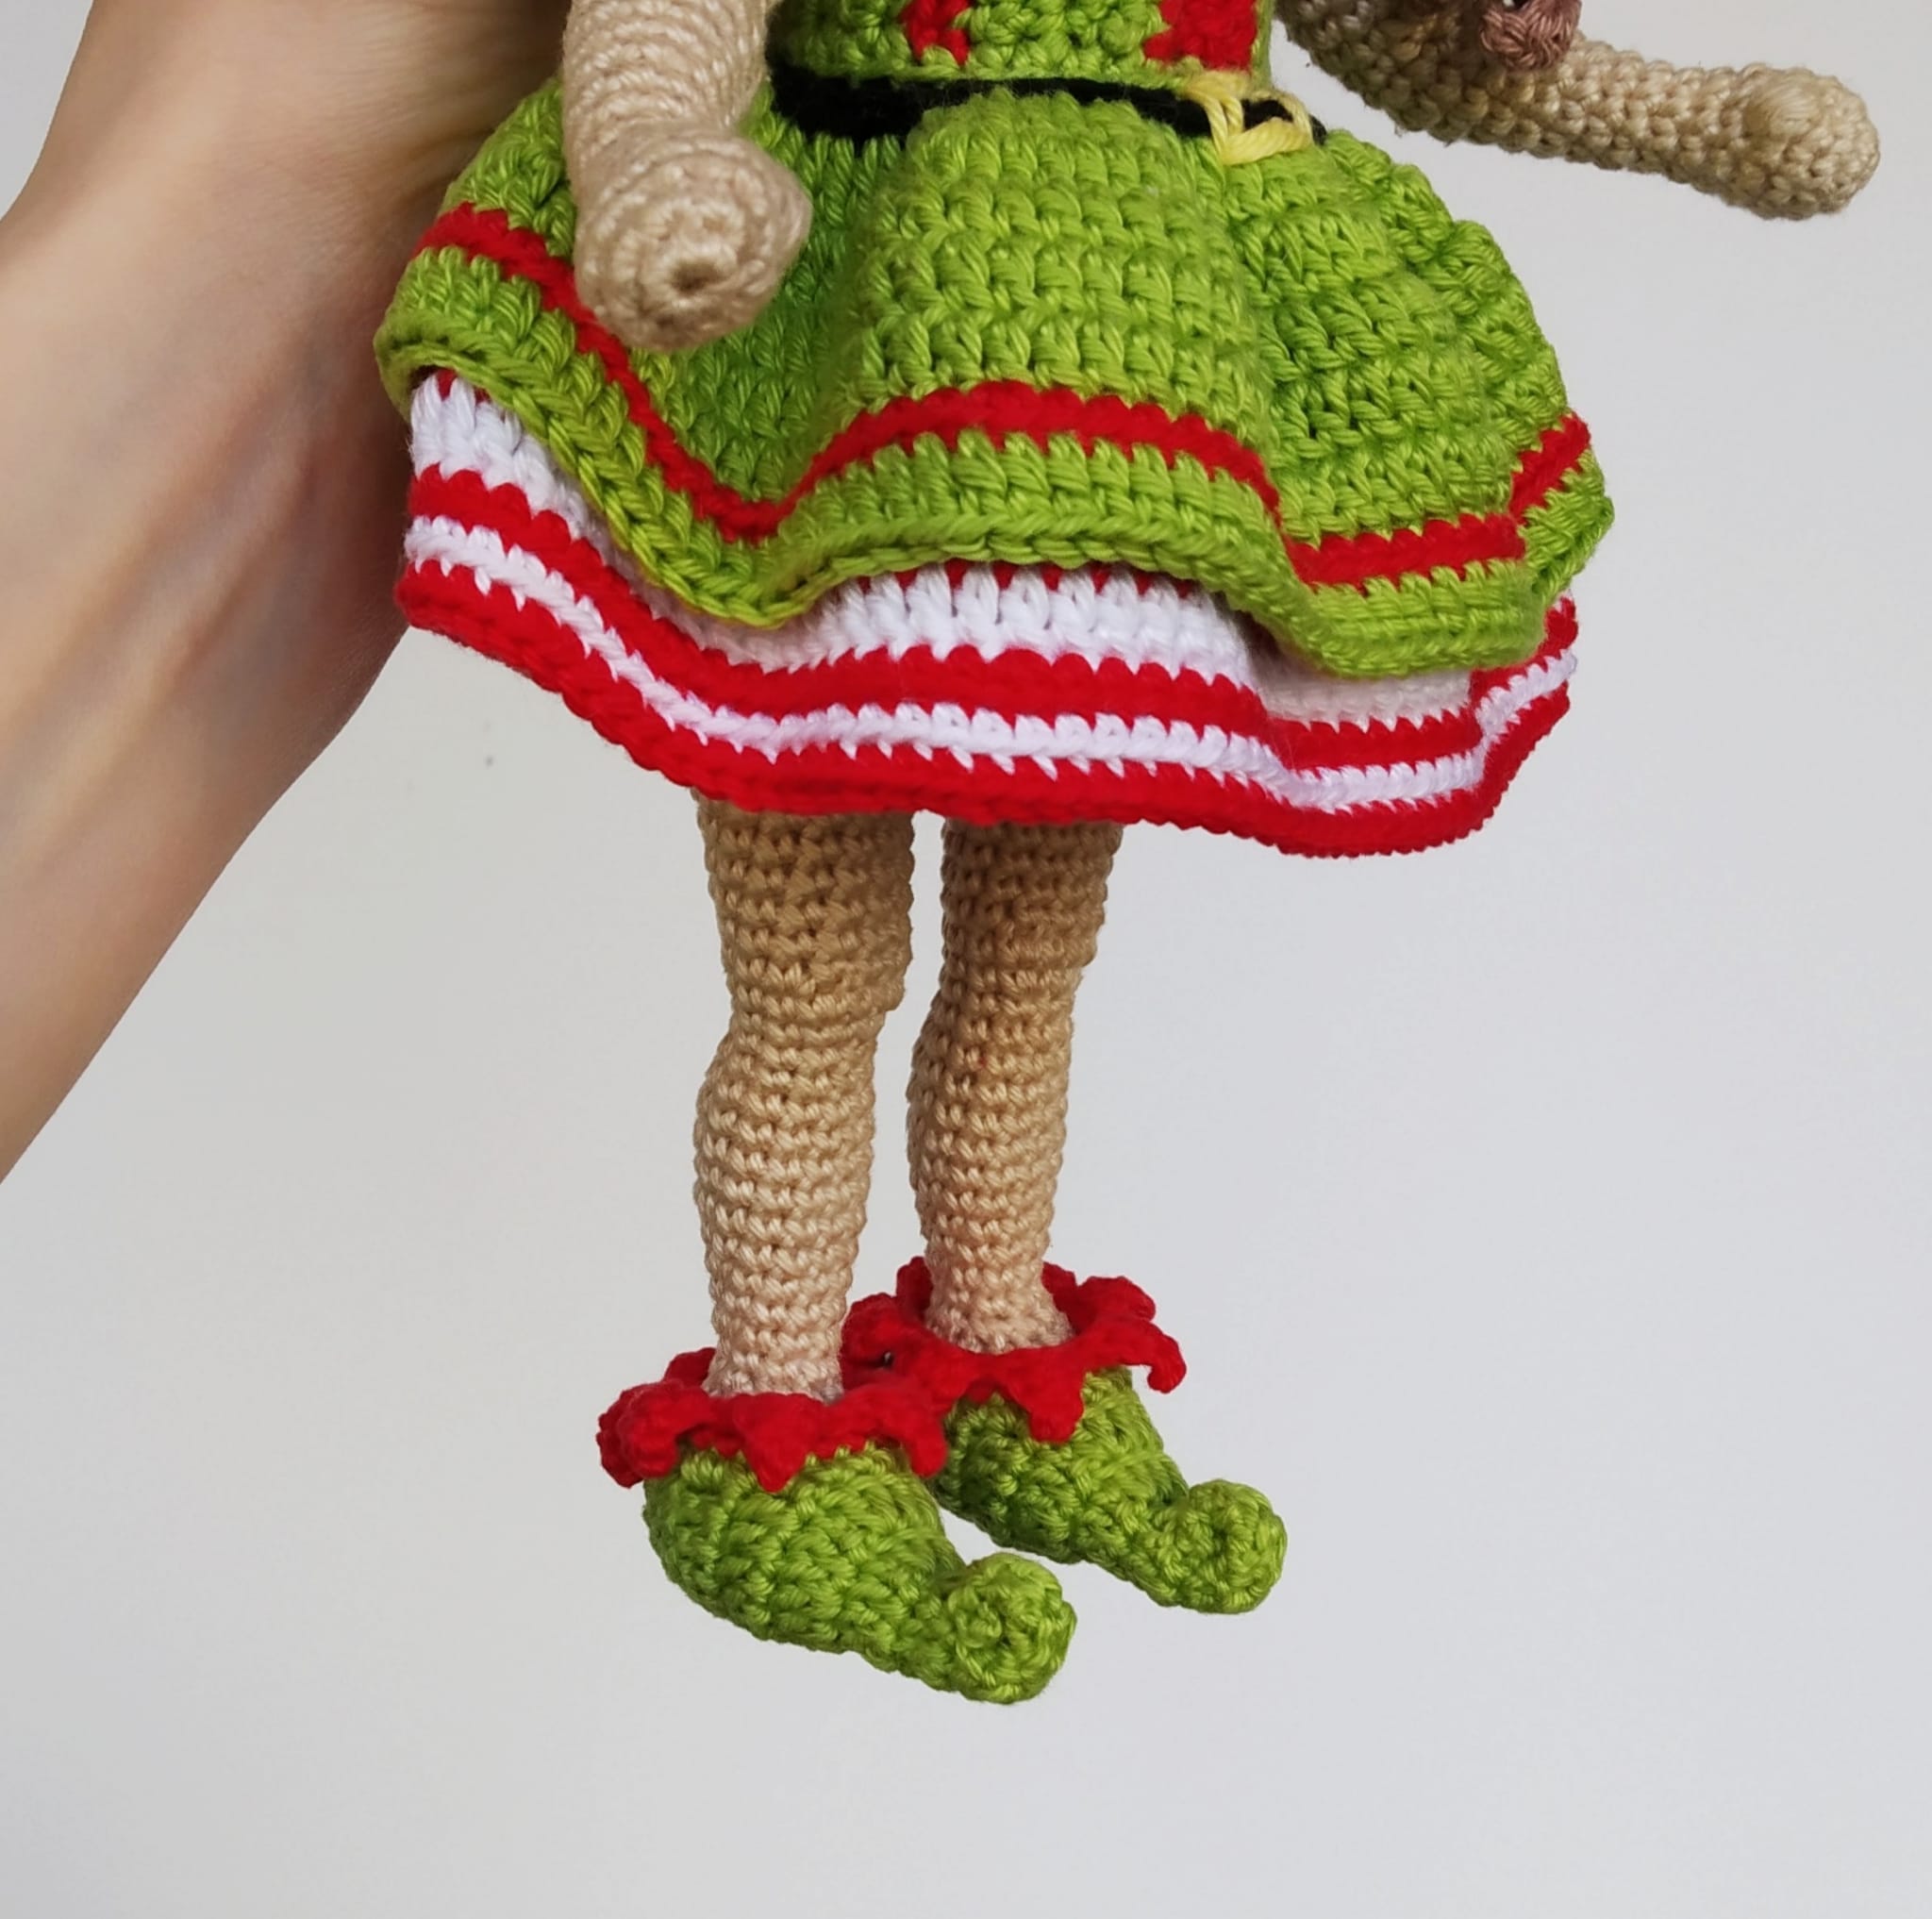 Crochet doll pattern amigurumi baby doll pattern (English, Deutsch